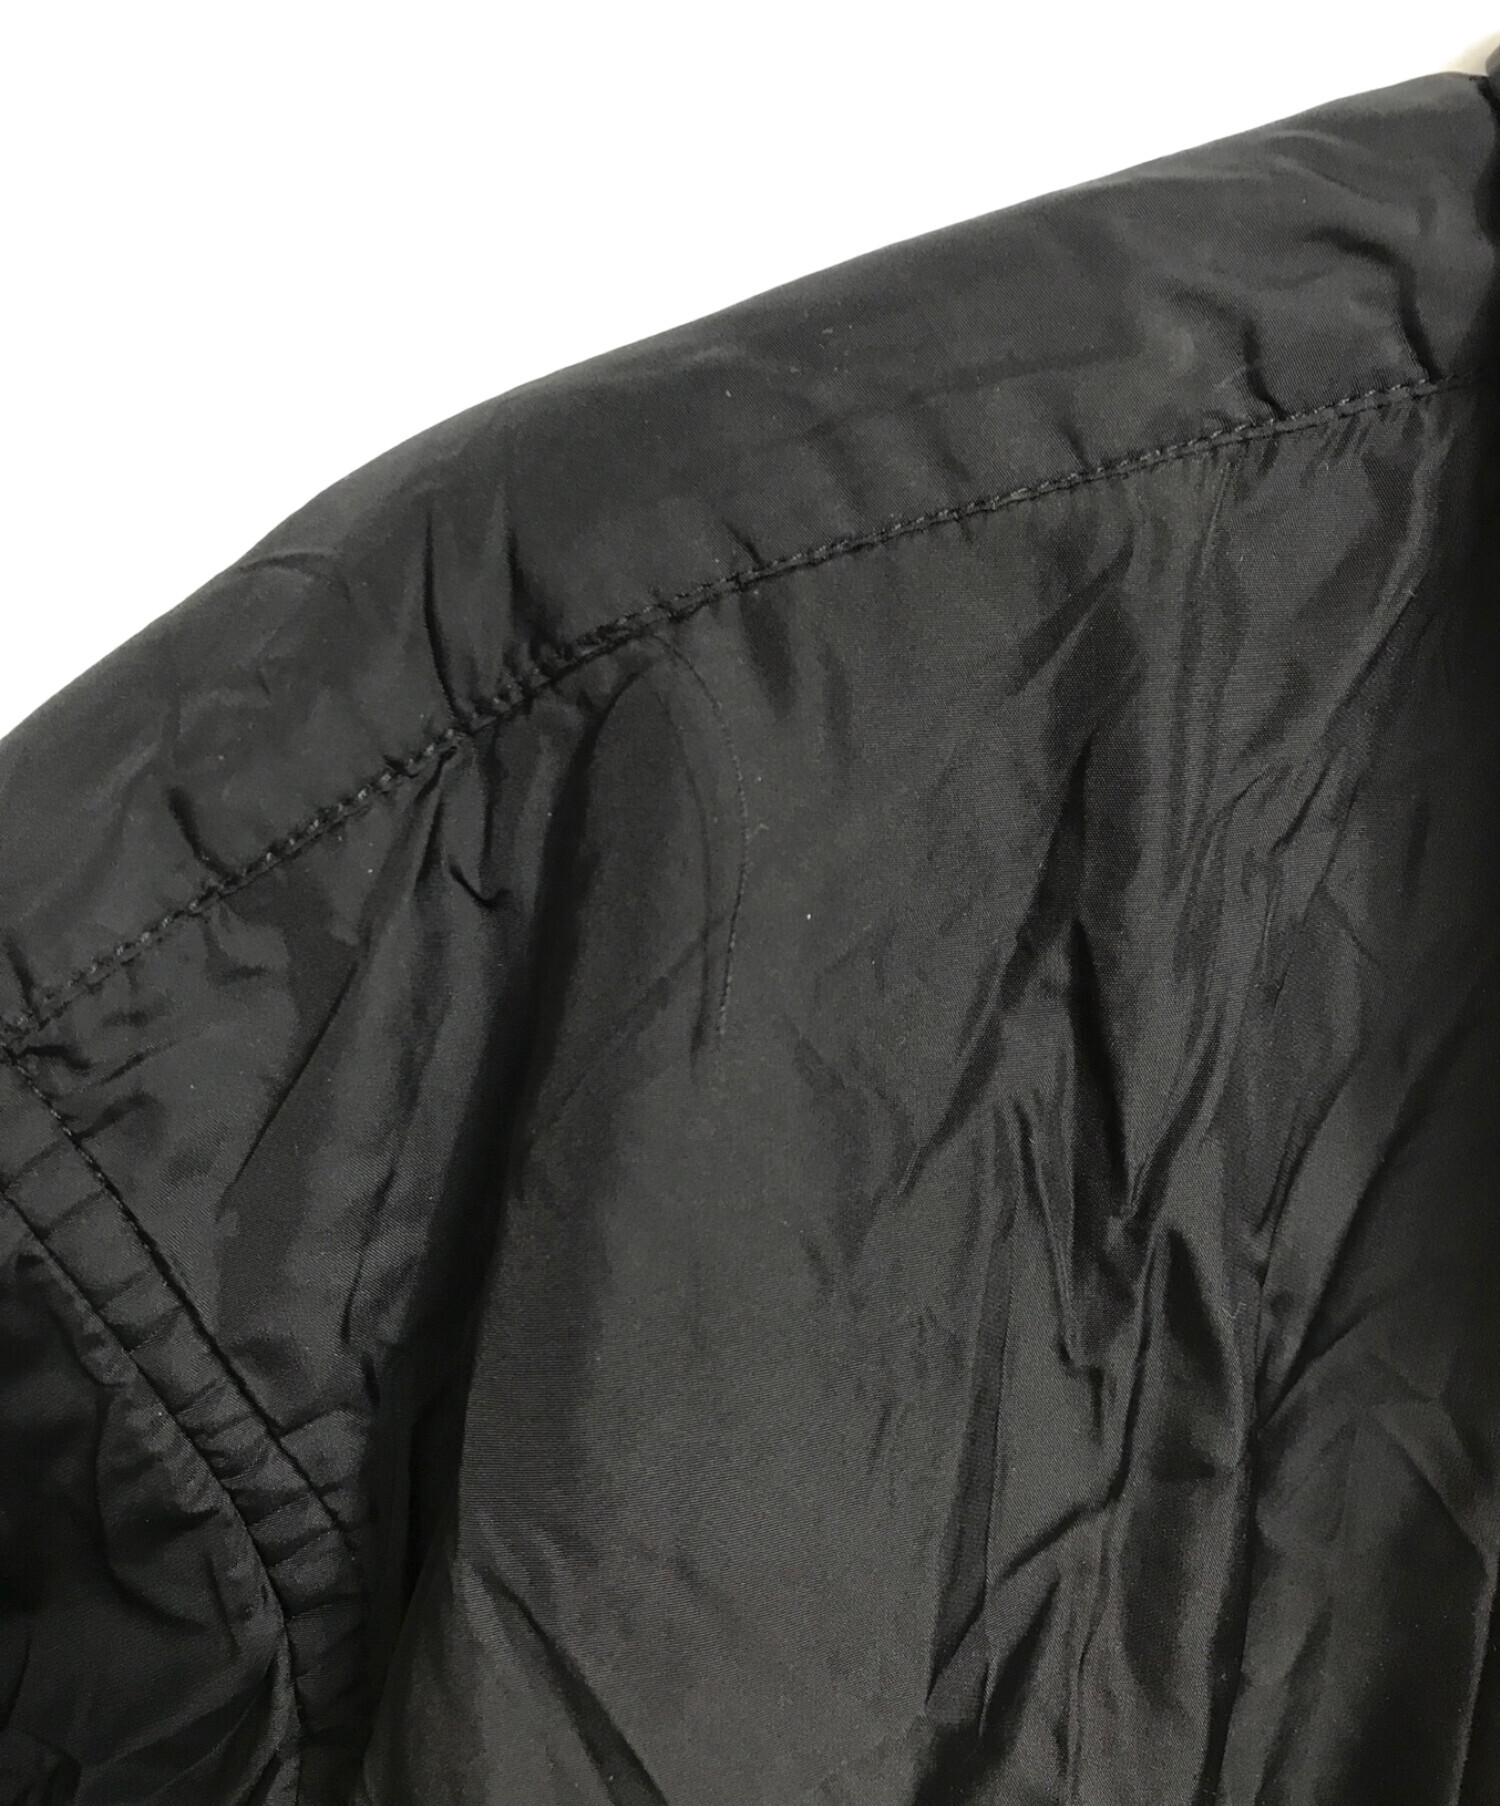 SUPREME 22AW Nylon Fille Shirt ブラック購入価格30000円程度